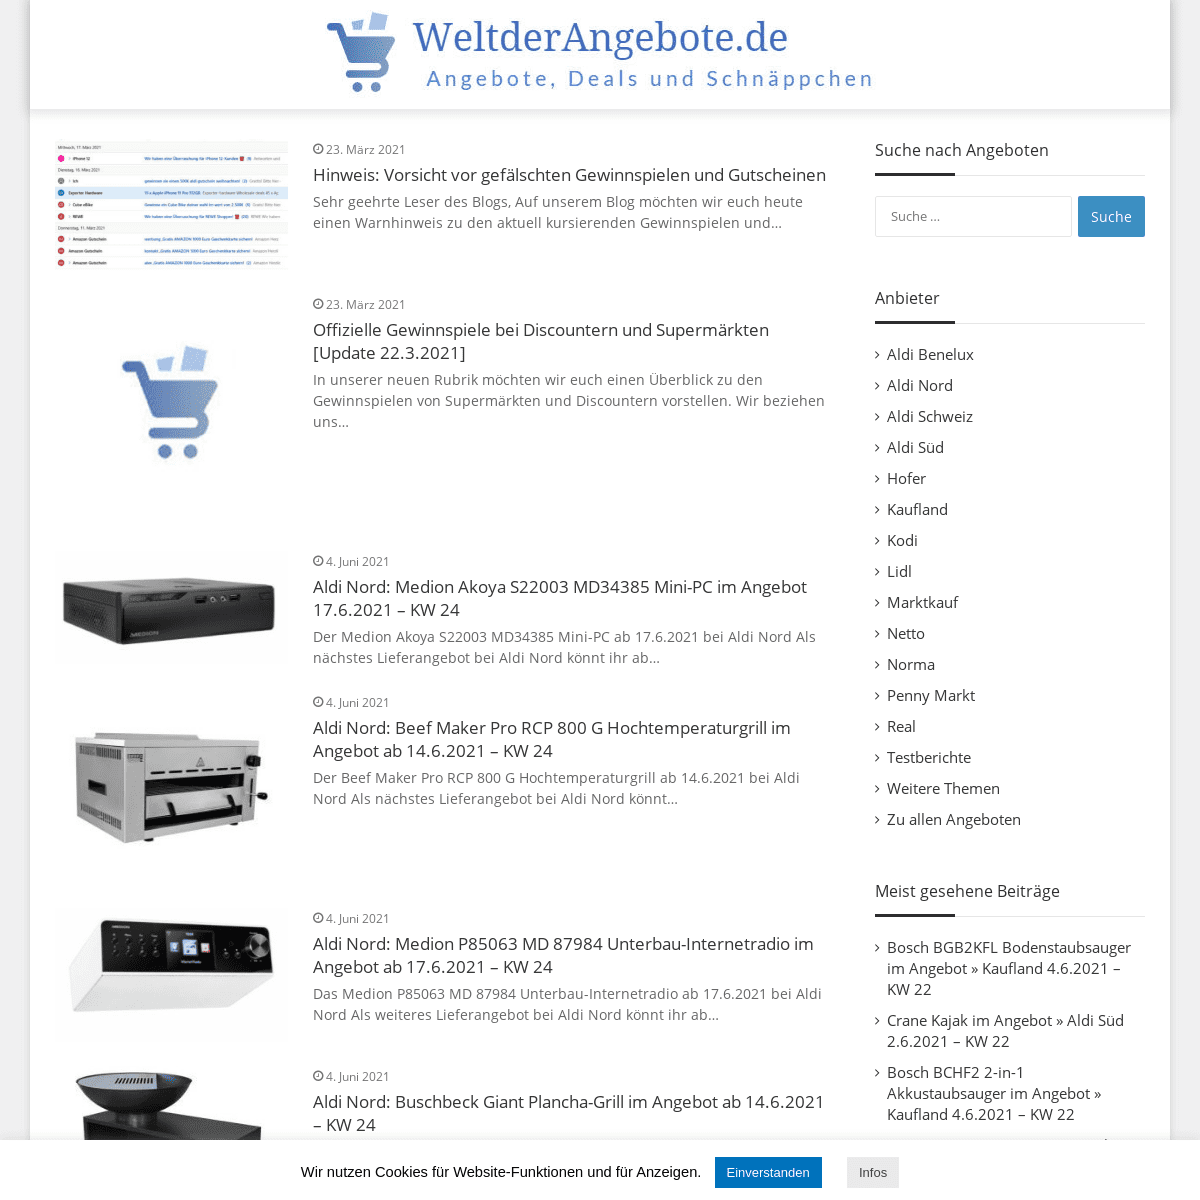 A complete backup of https://weltdergadgets.de